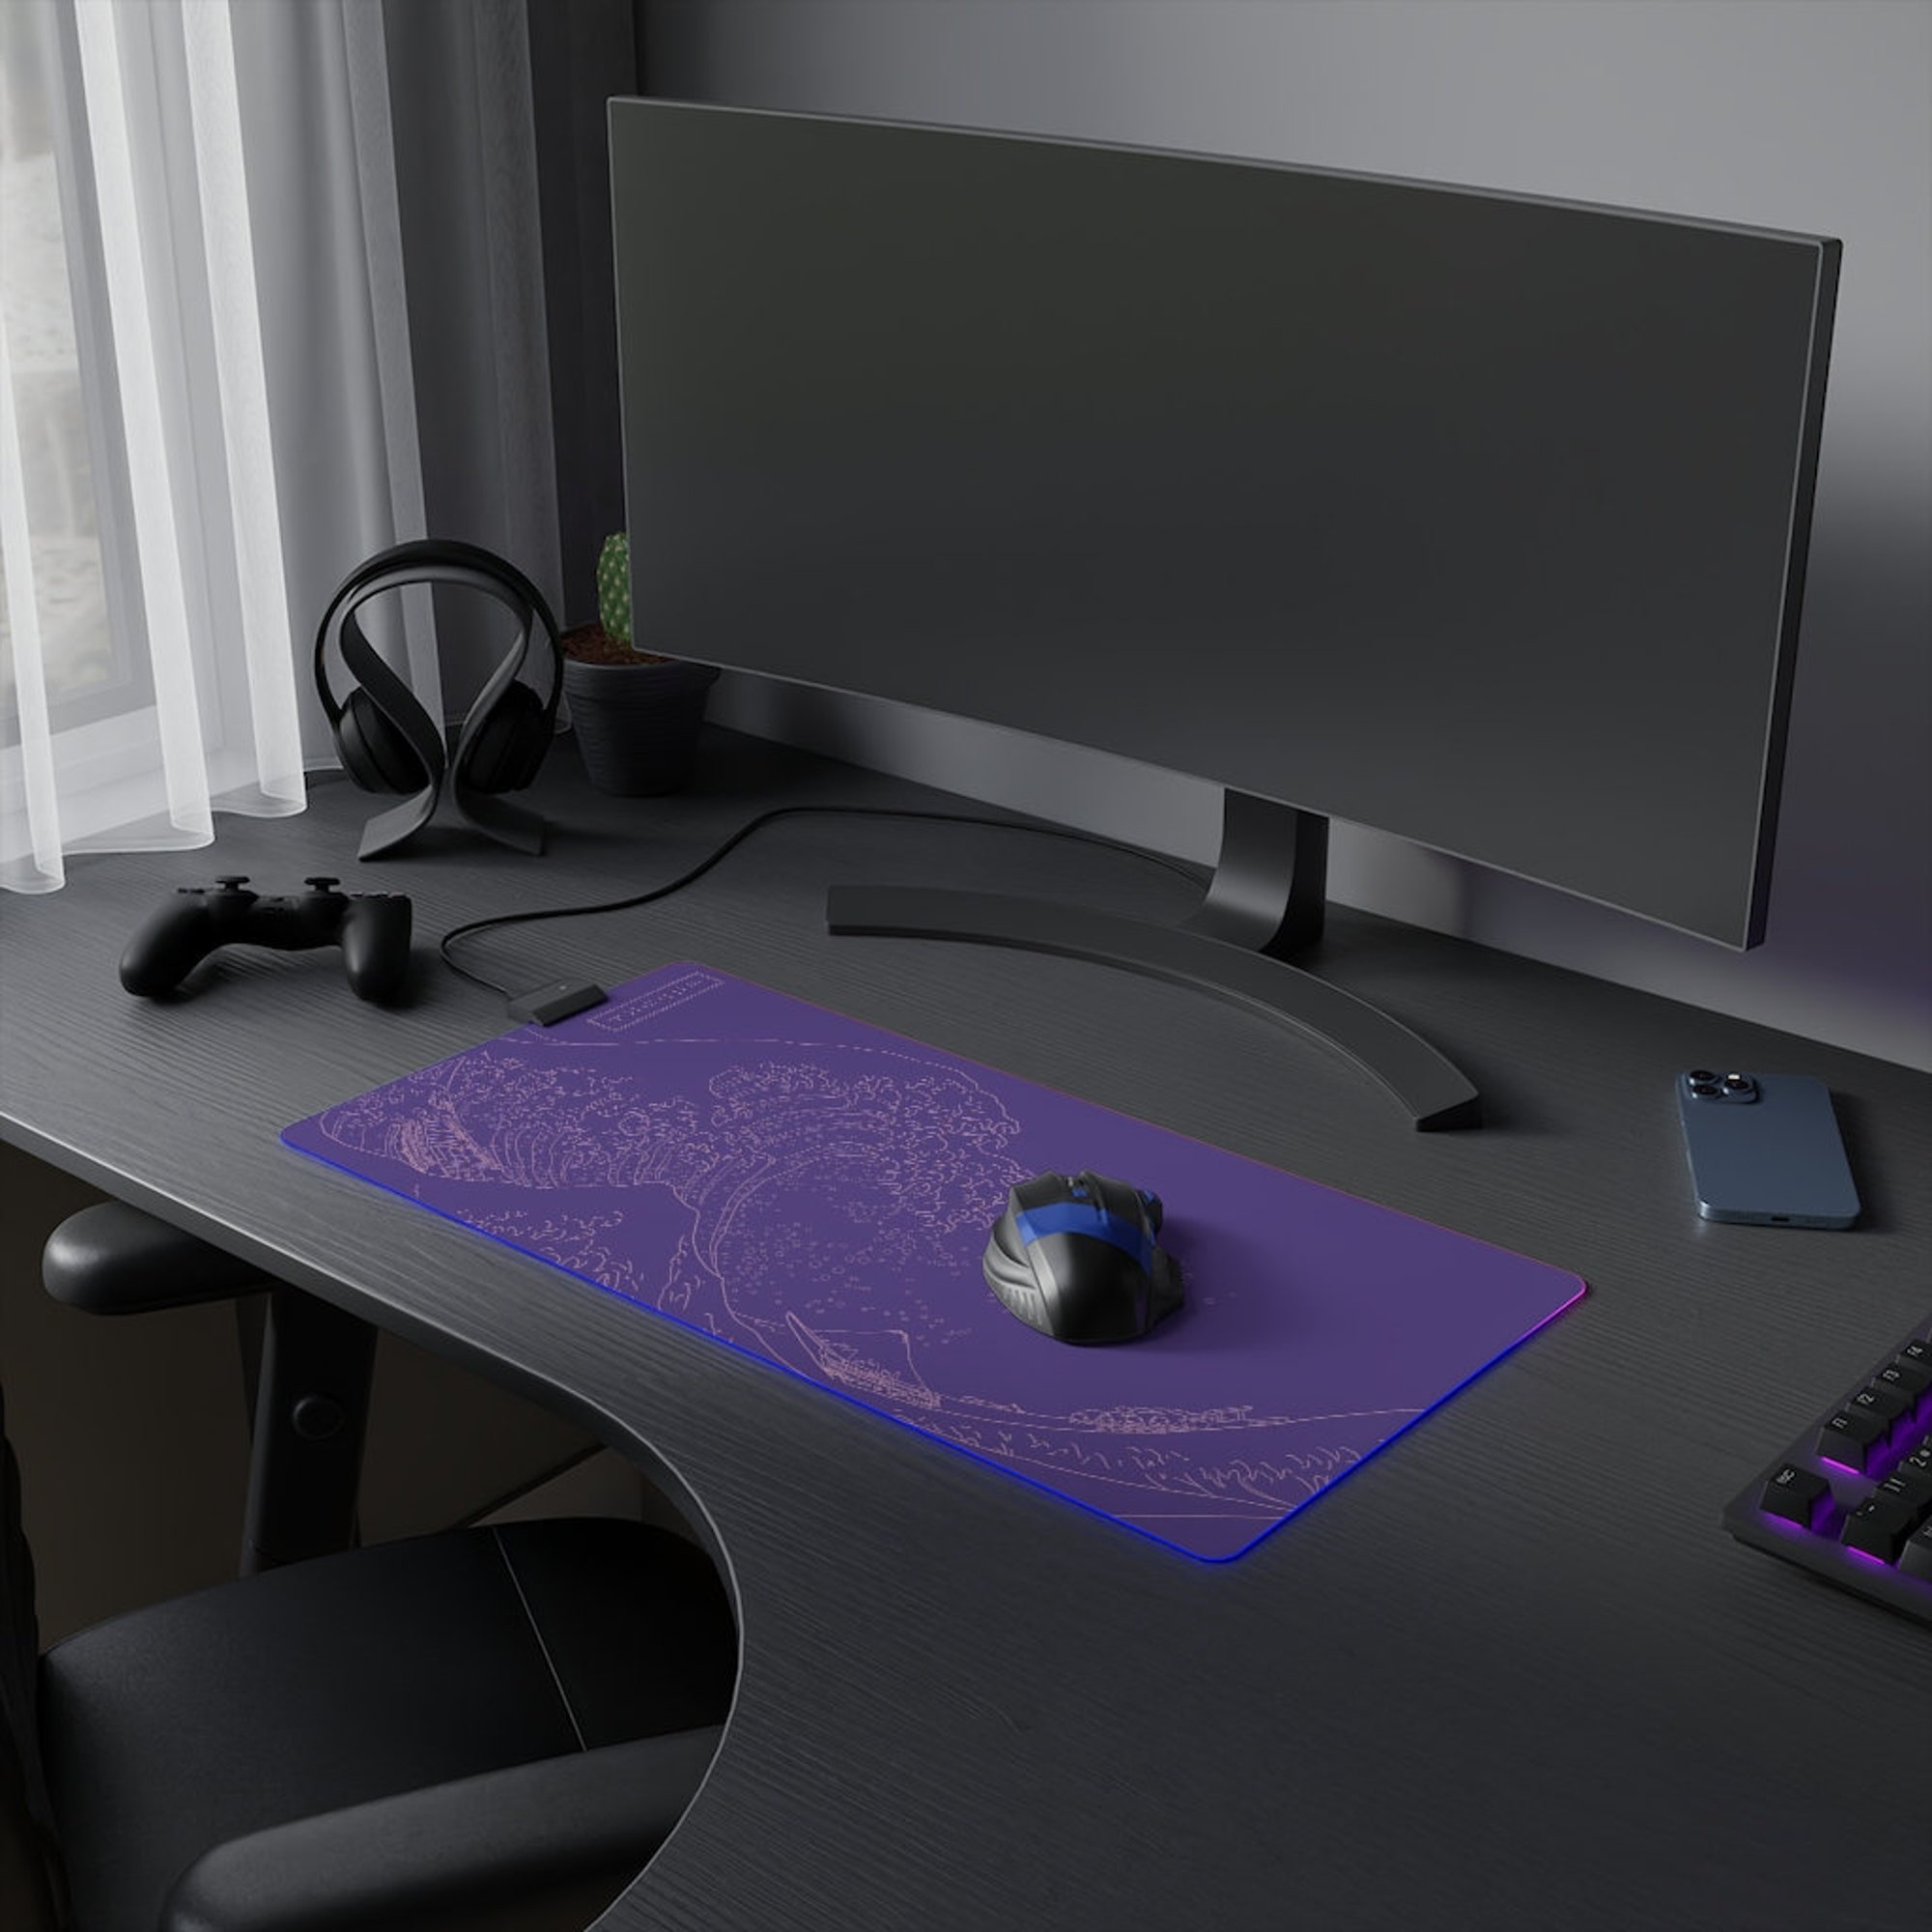 Sewn Edges Japanese LED desk mat, Purple Gaming Mouse Pad